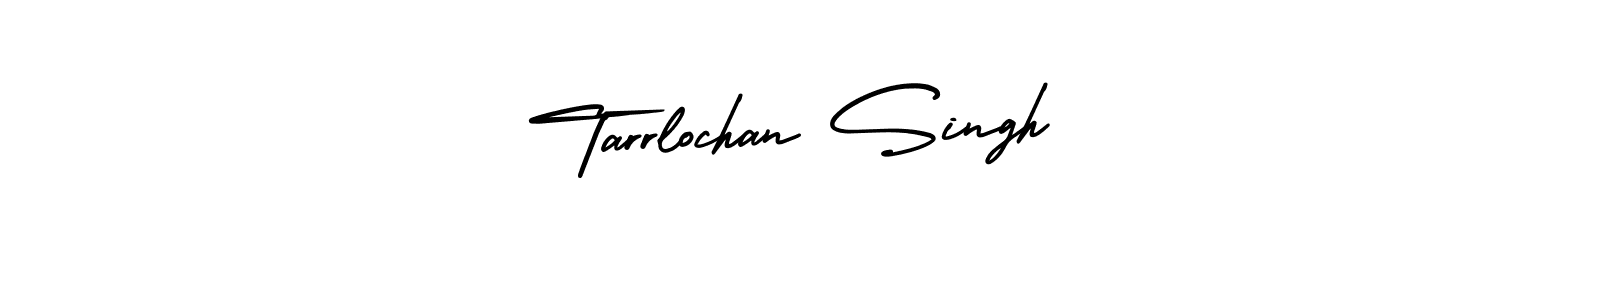 How to Draw Tarrlochan Singh signature style? AmerikaSignatureDemo-Regular is a latest design signature styles for name Tarrlochan Singh. Tarrlochan Singh signature style 3 images and pictures png